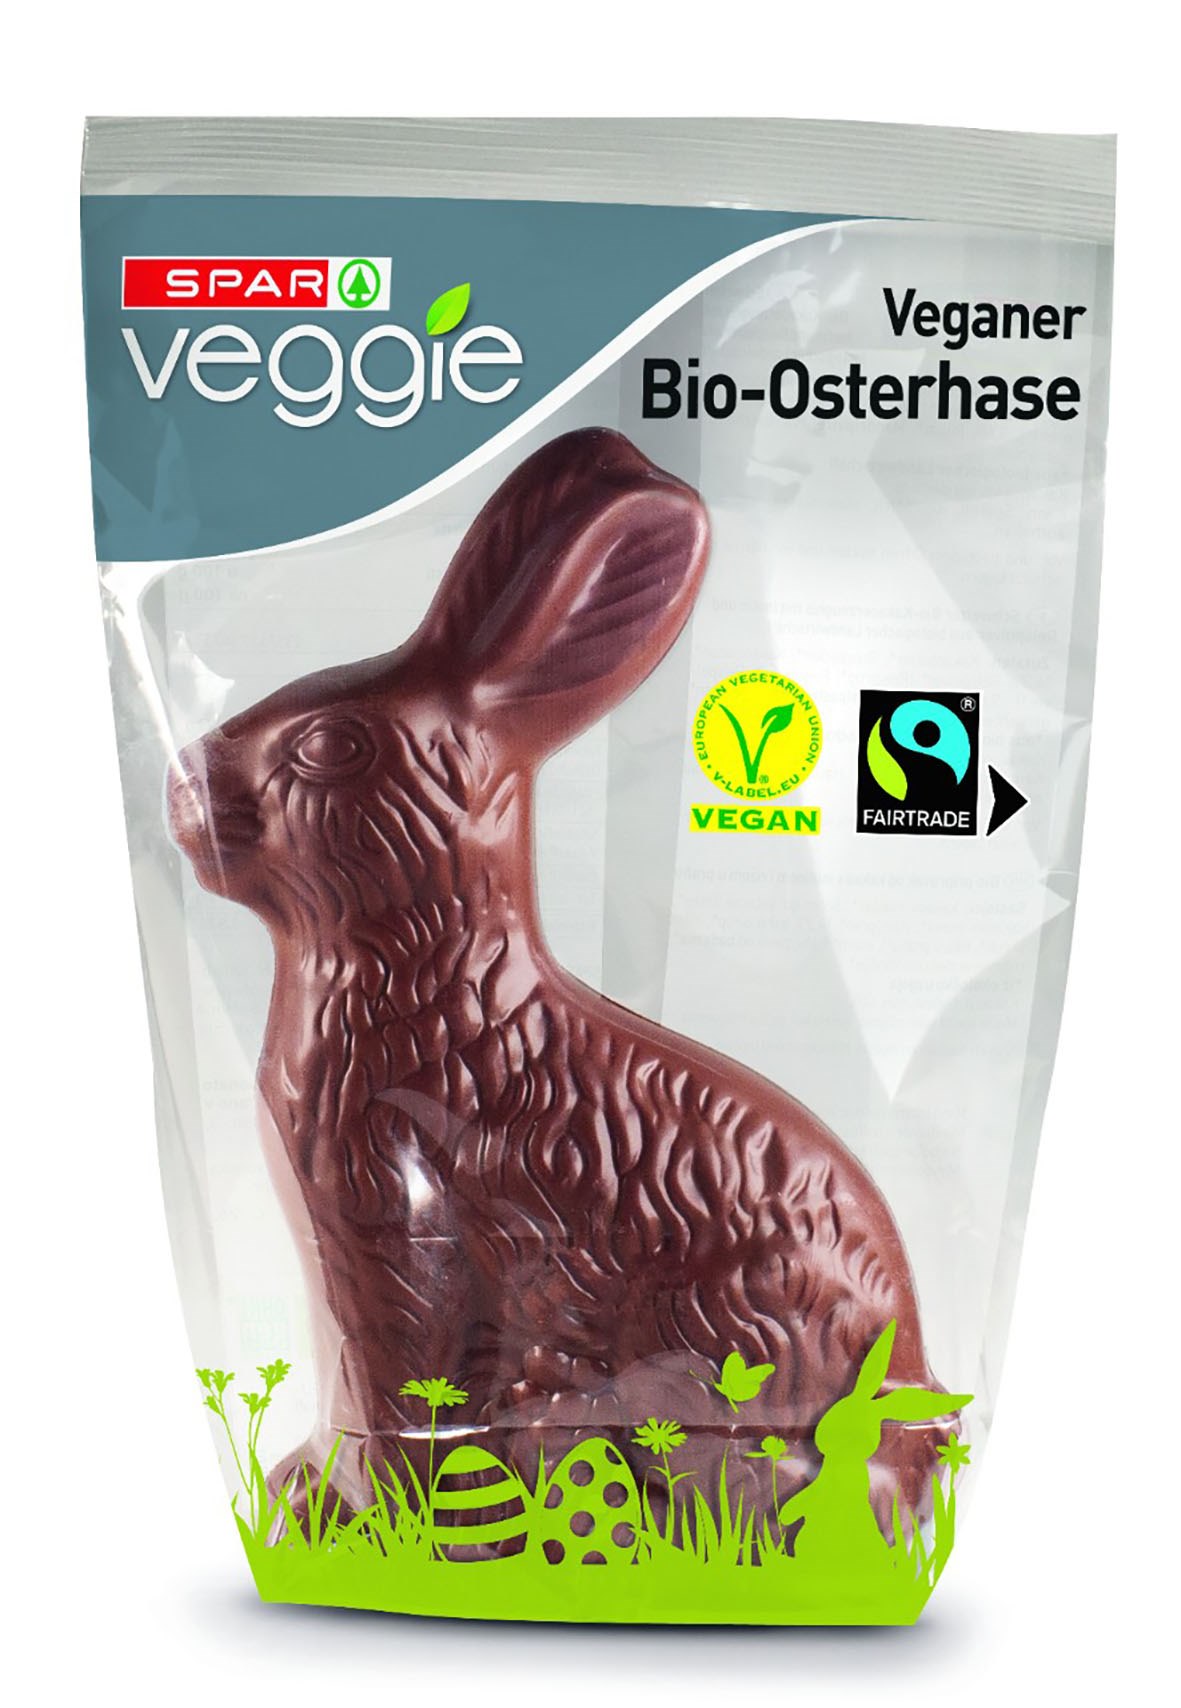 SPAR Veggie Veganer Bio-Osterhase